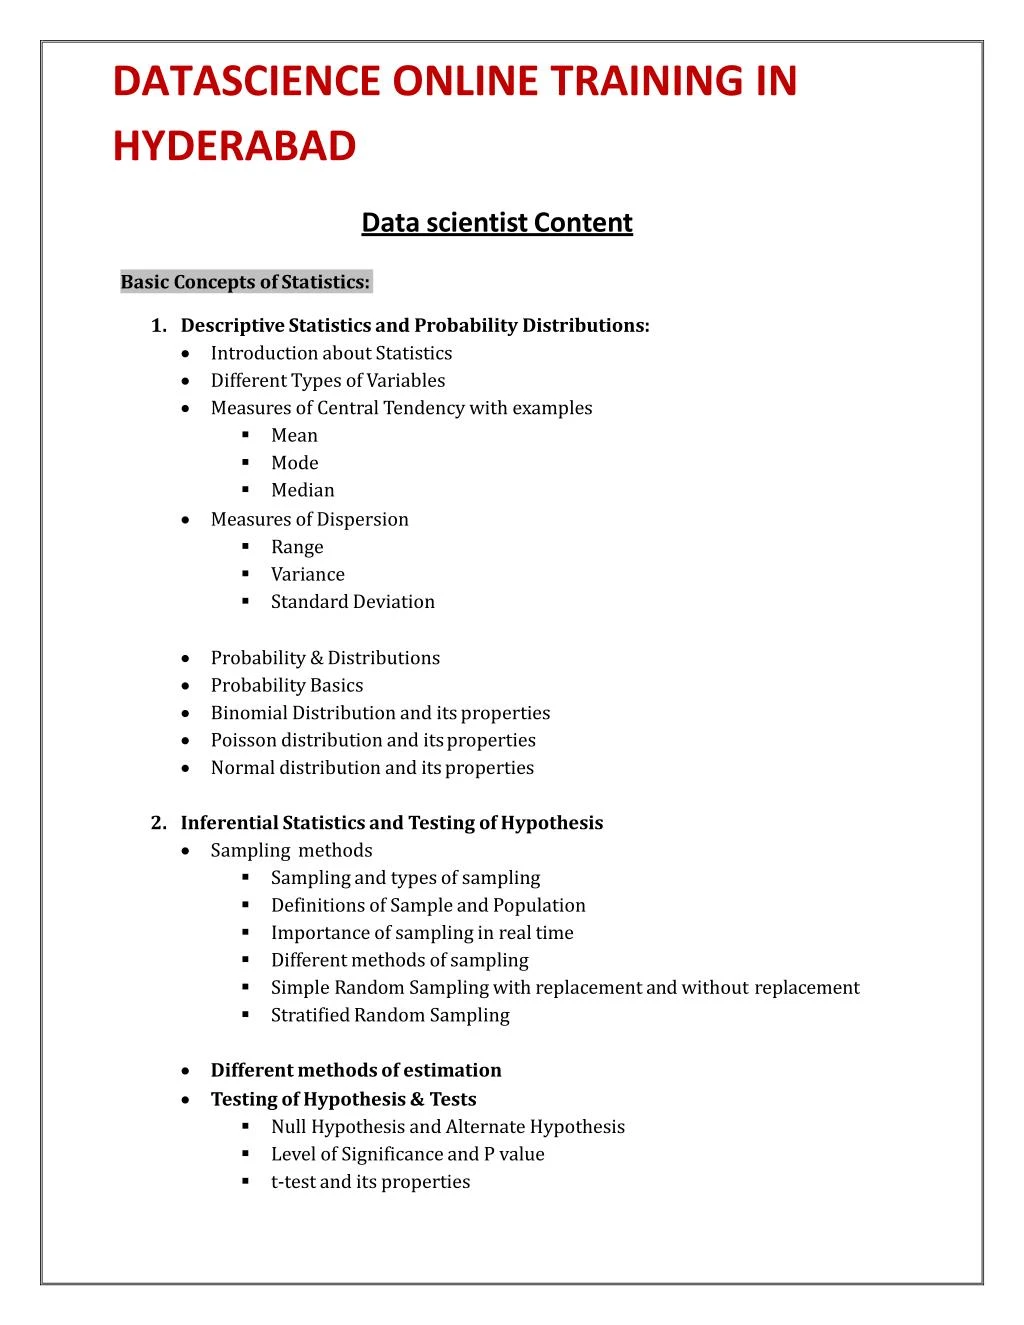 datascience online training in hyderabad